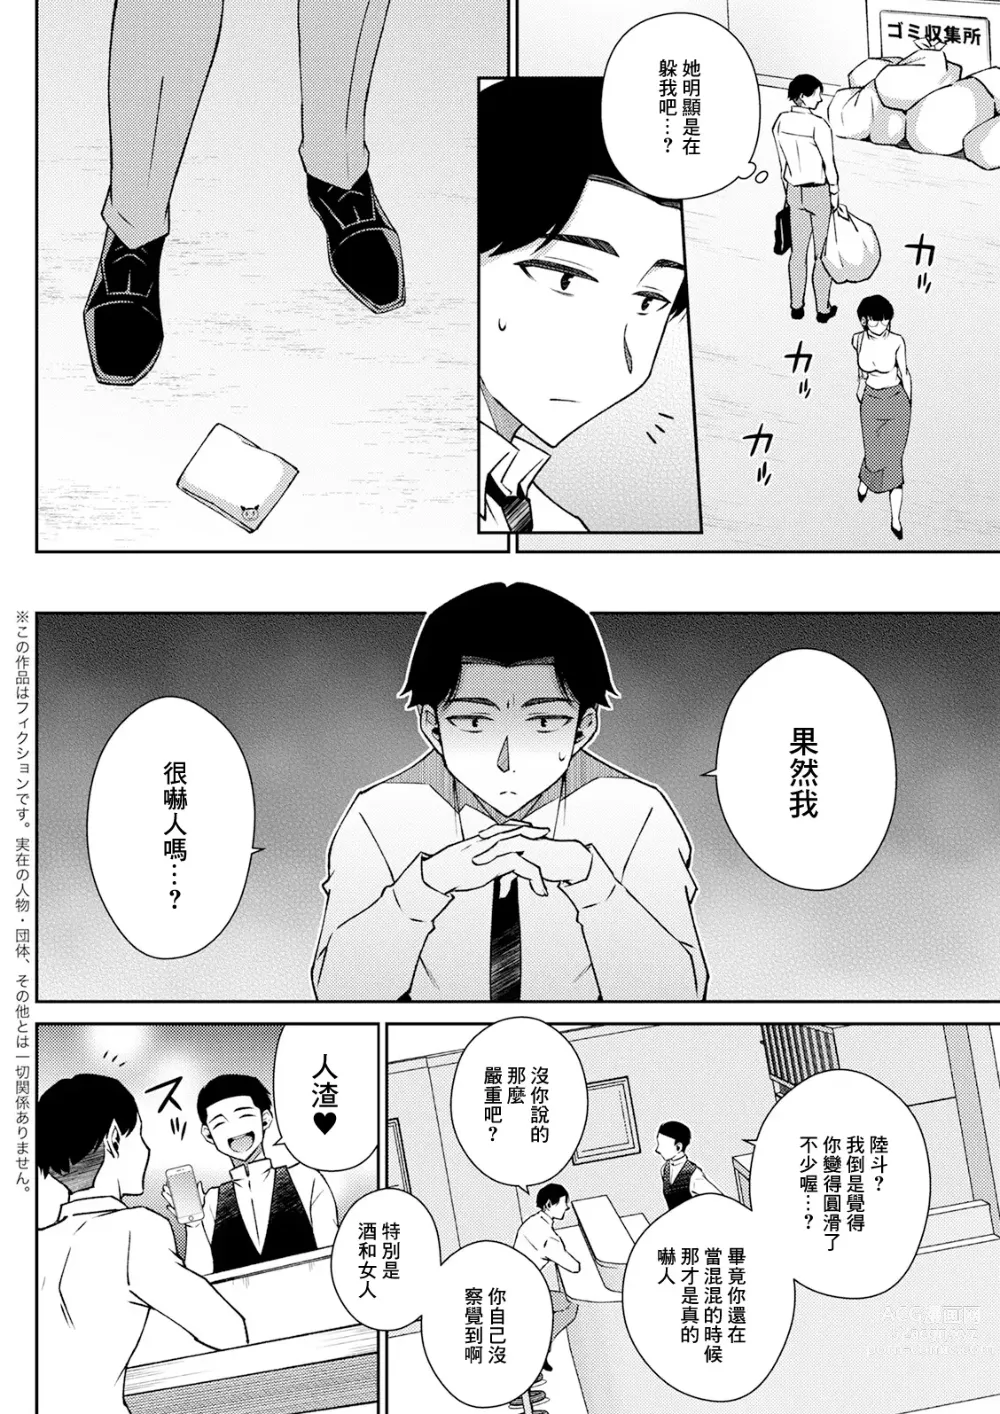 Page 2 of manga 大人になれない